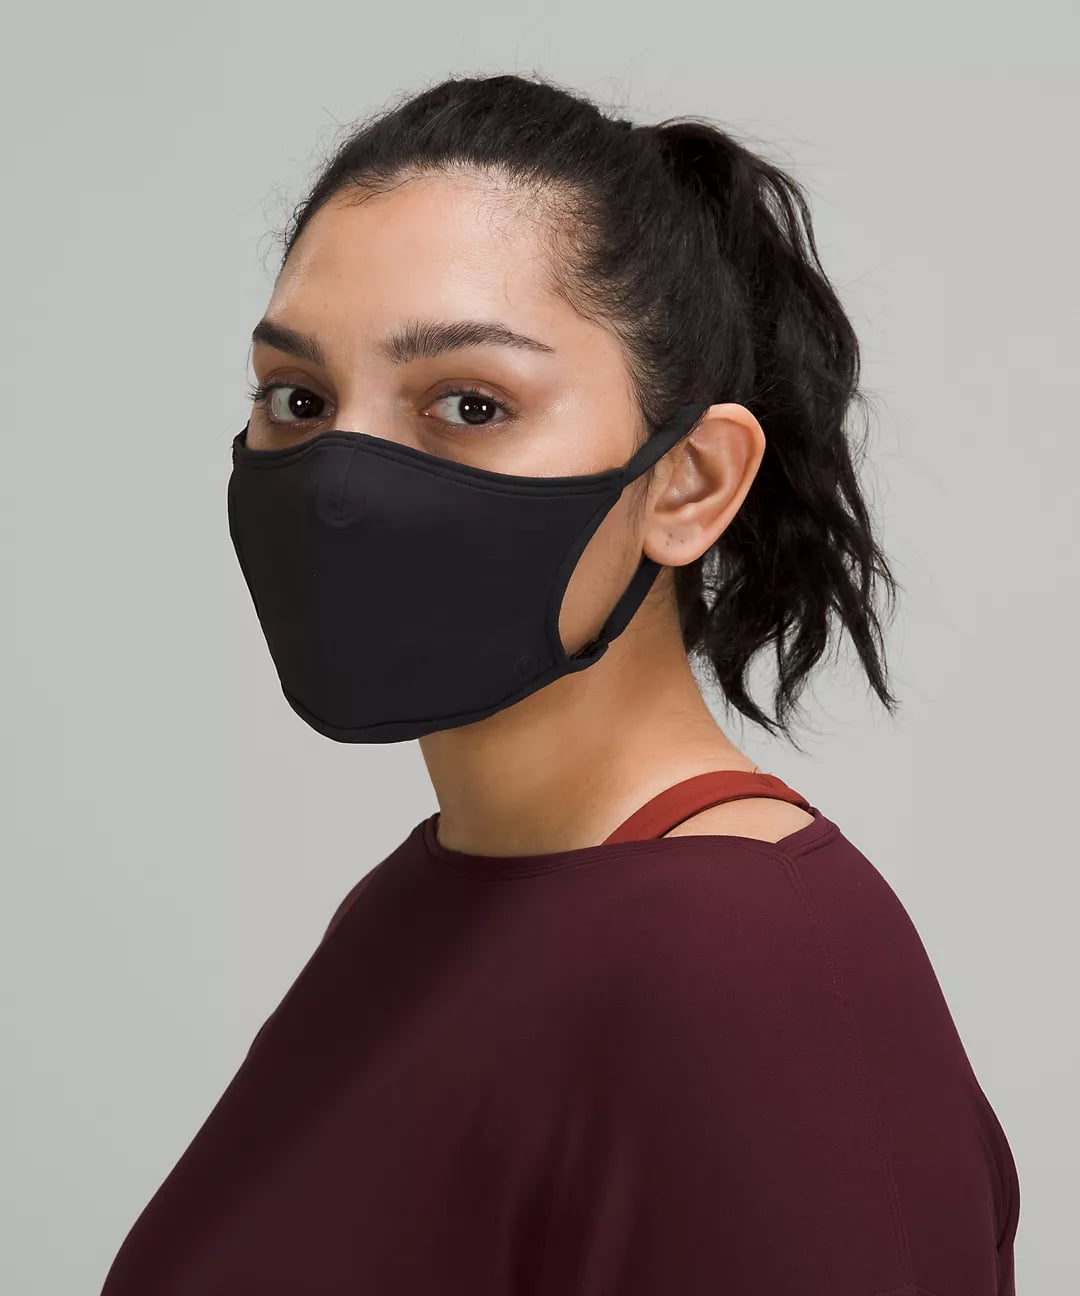 Lululemon's New Double Strap Face Mask For $10